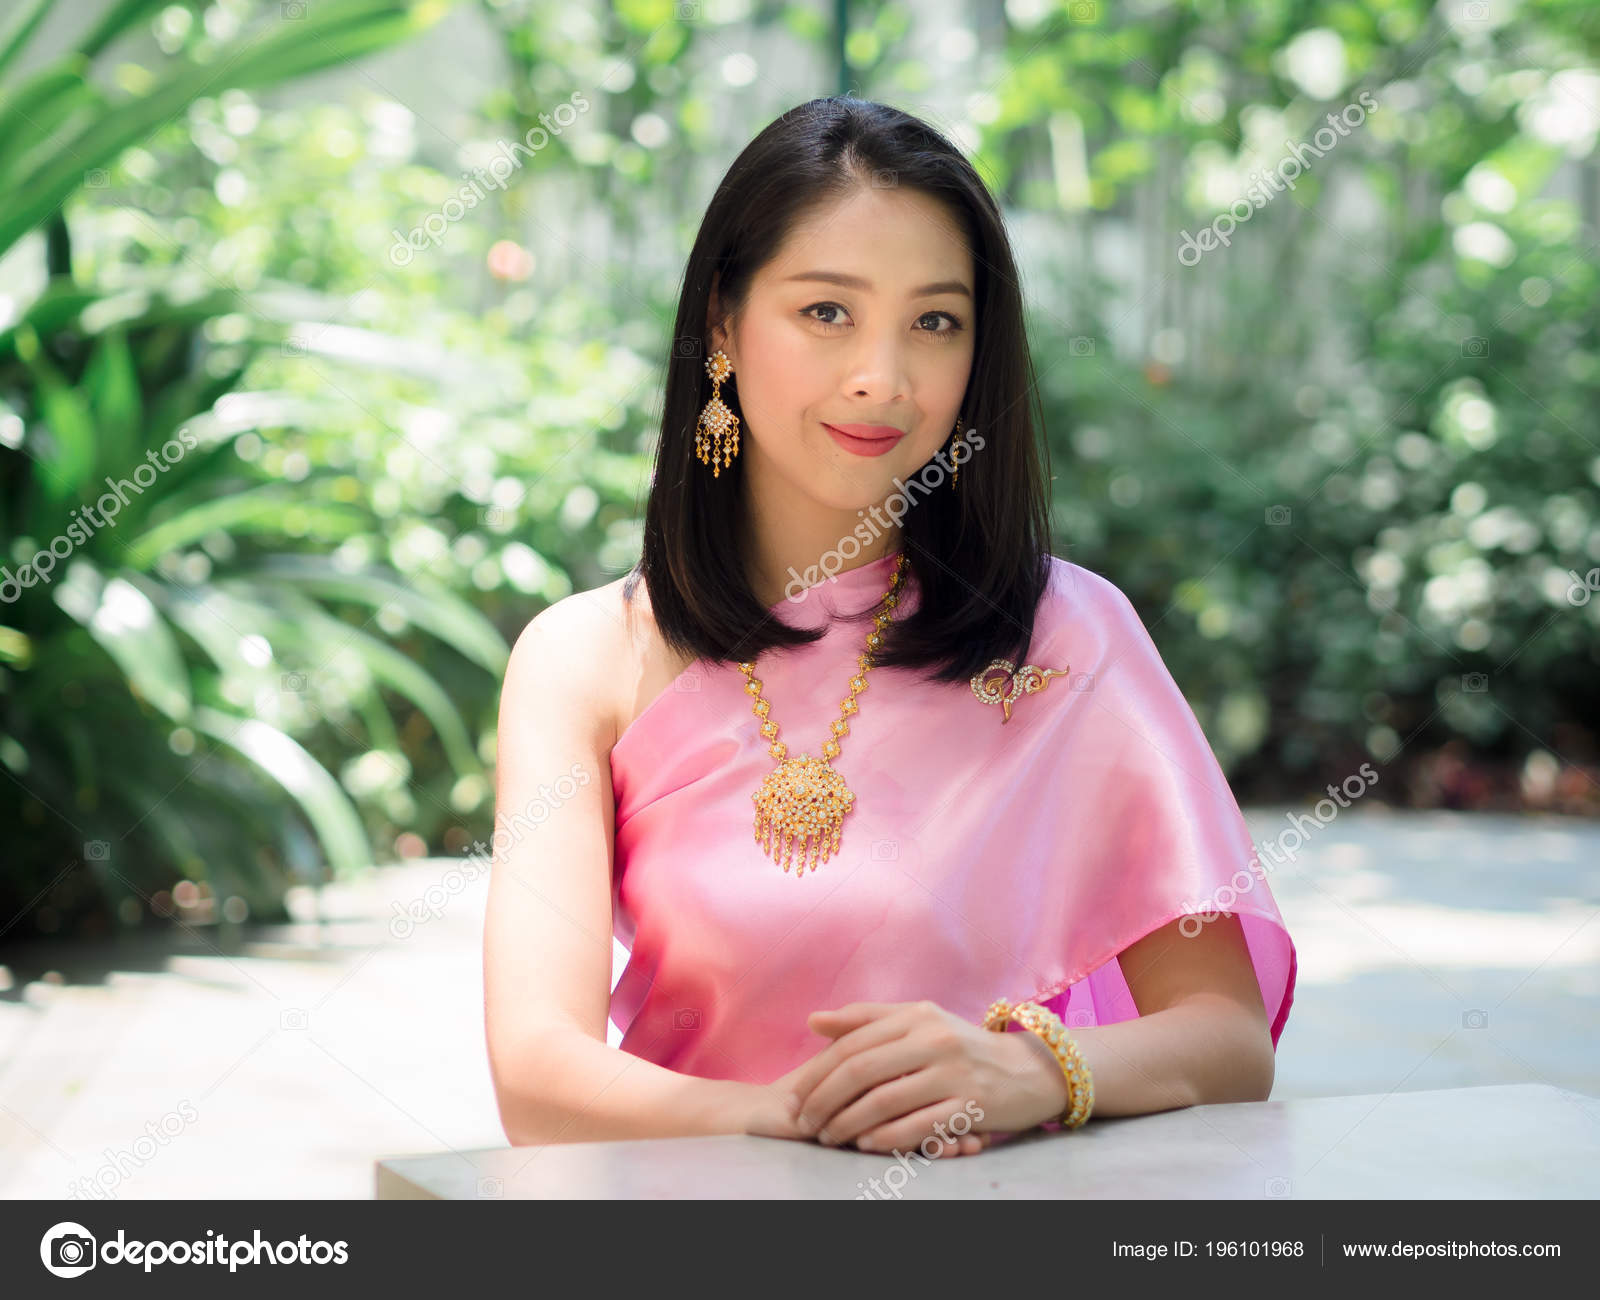 https://st4.depositphotos.com/5192617/19610/i/1600/depositphotos_196101968-stock-photo-beautiful-thai-woman-thai-traditional.jpg